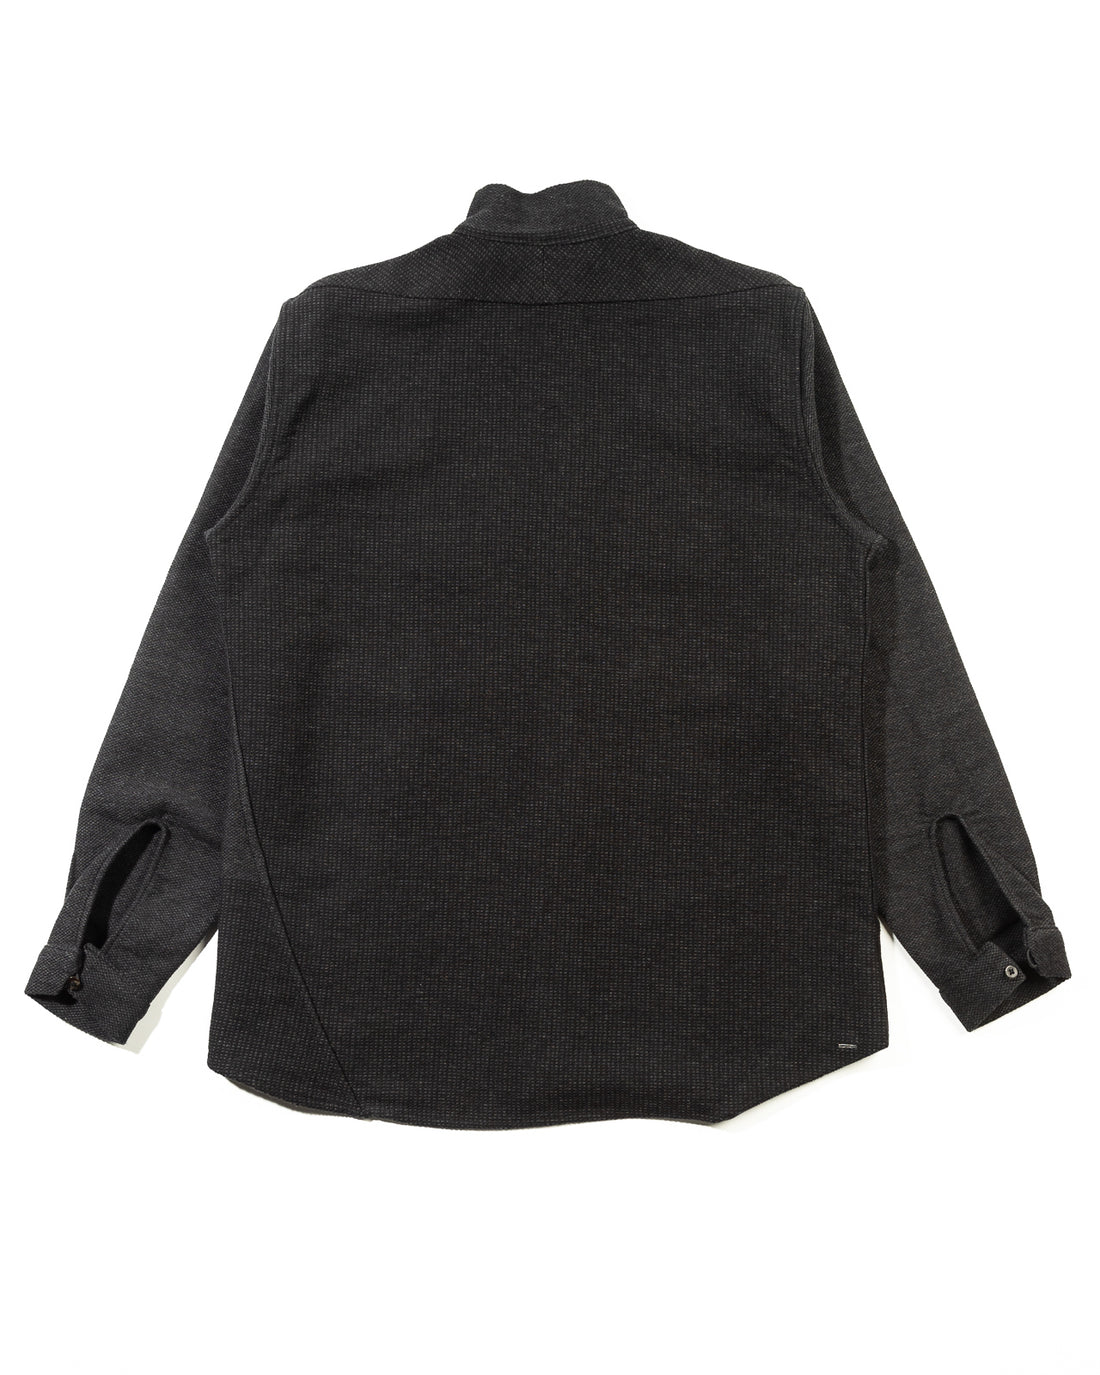 MATiAS Hana Shirt - Gennaio Black/Charcoal Jacquard Dobby - Standard & Strange